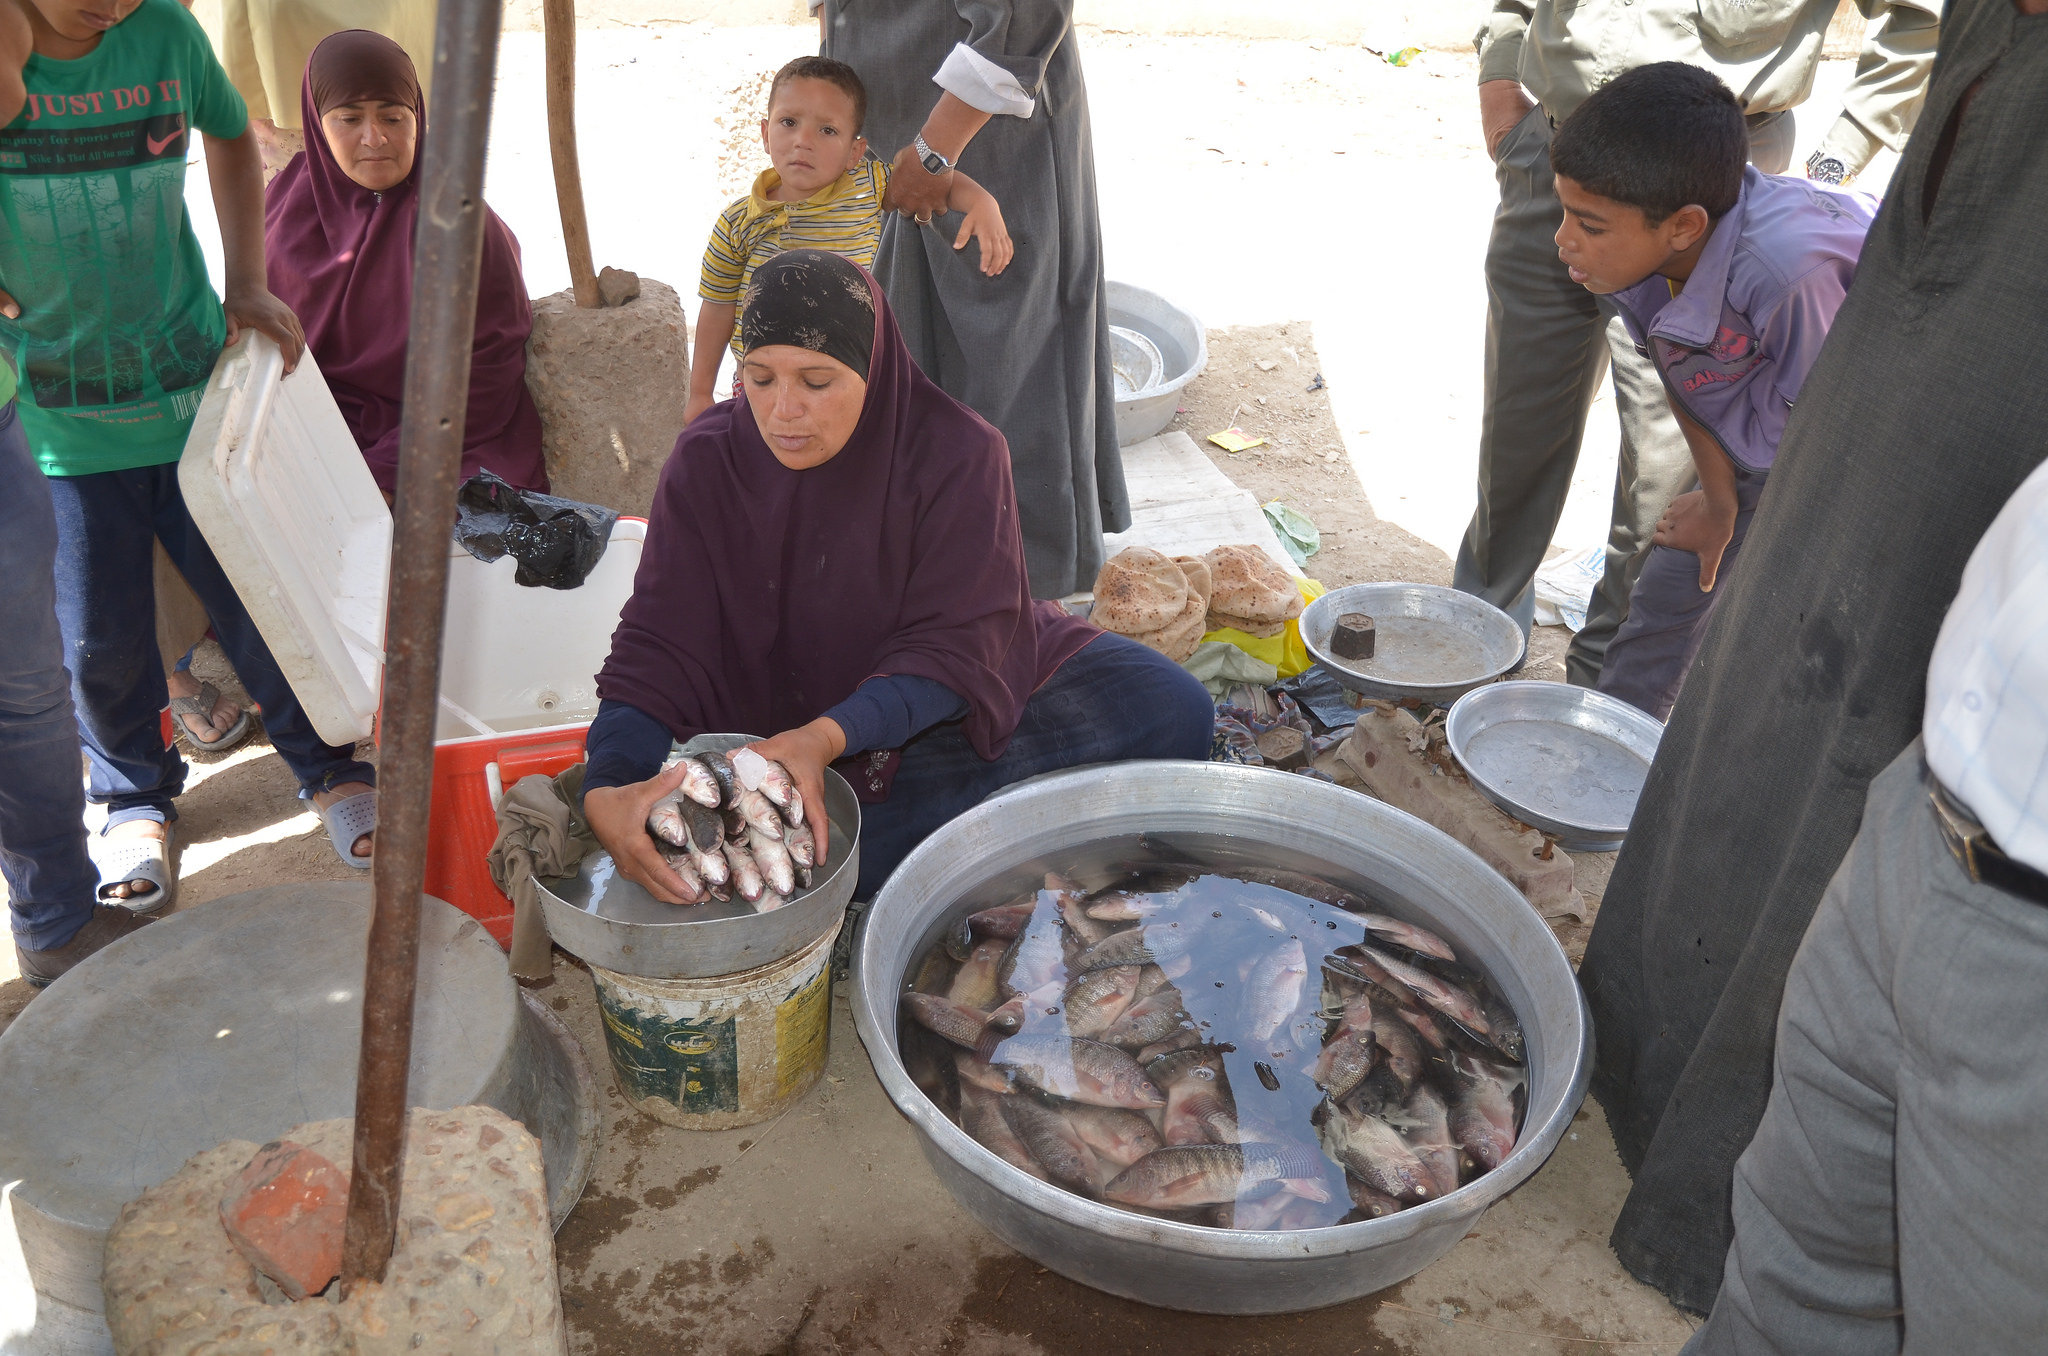 Women fish retailers in Shakshouk, Fayoum, Egypt. Photo by Jens Peter Tang Dalsgaard, 2013